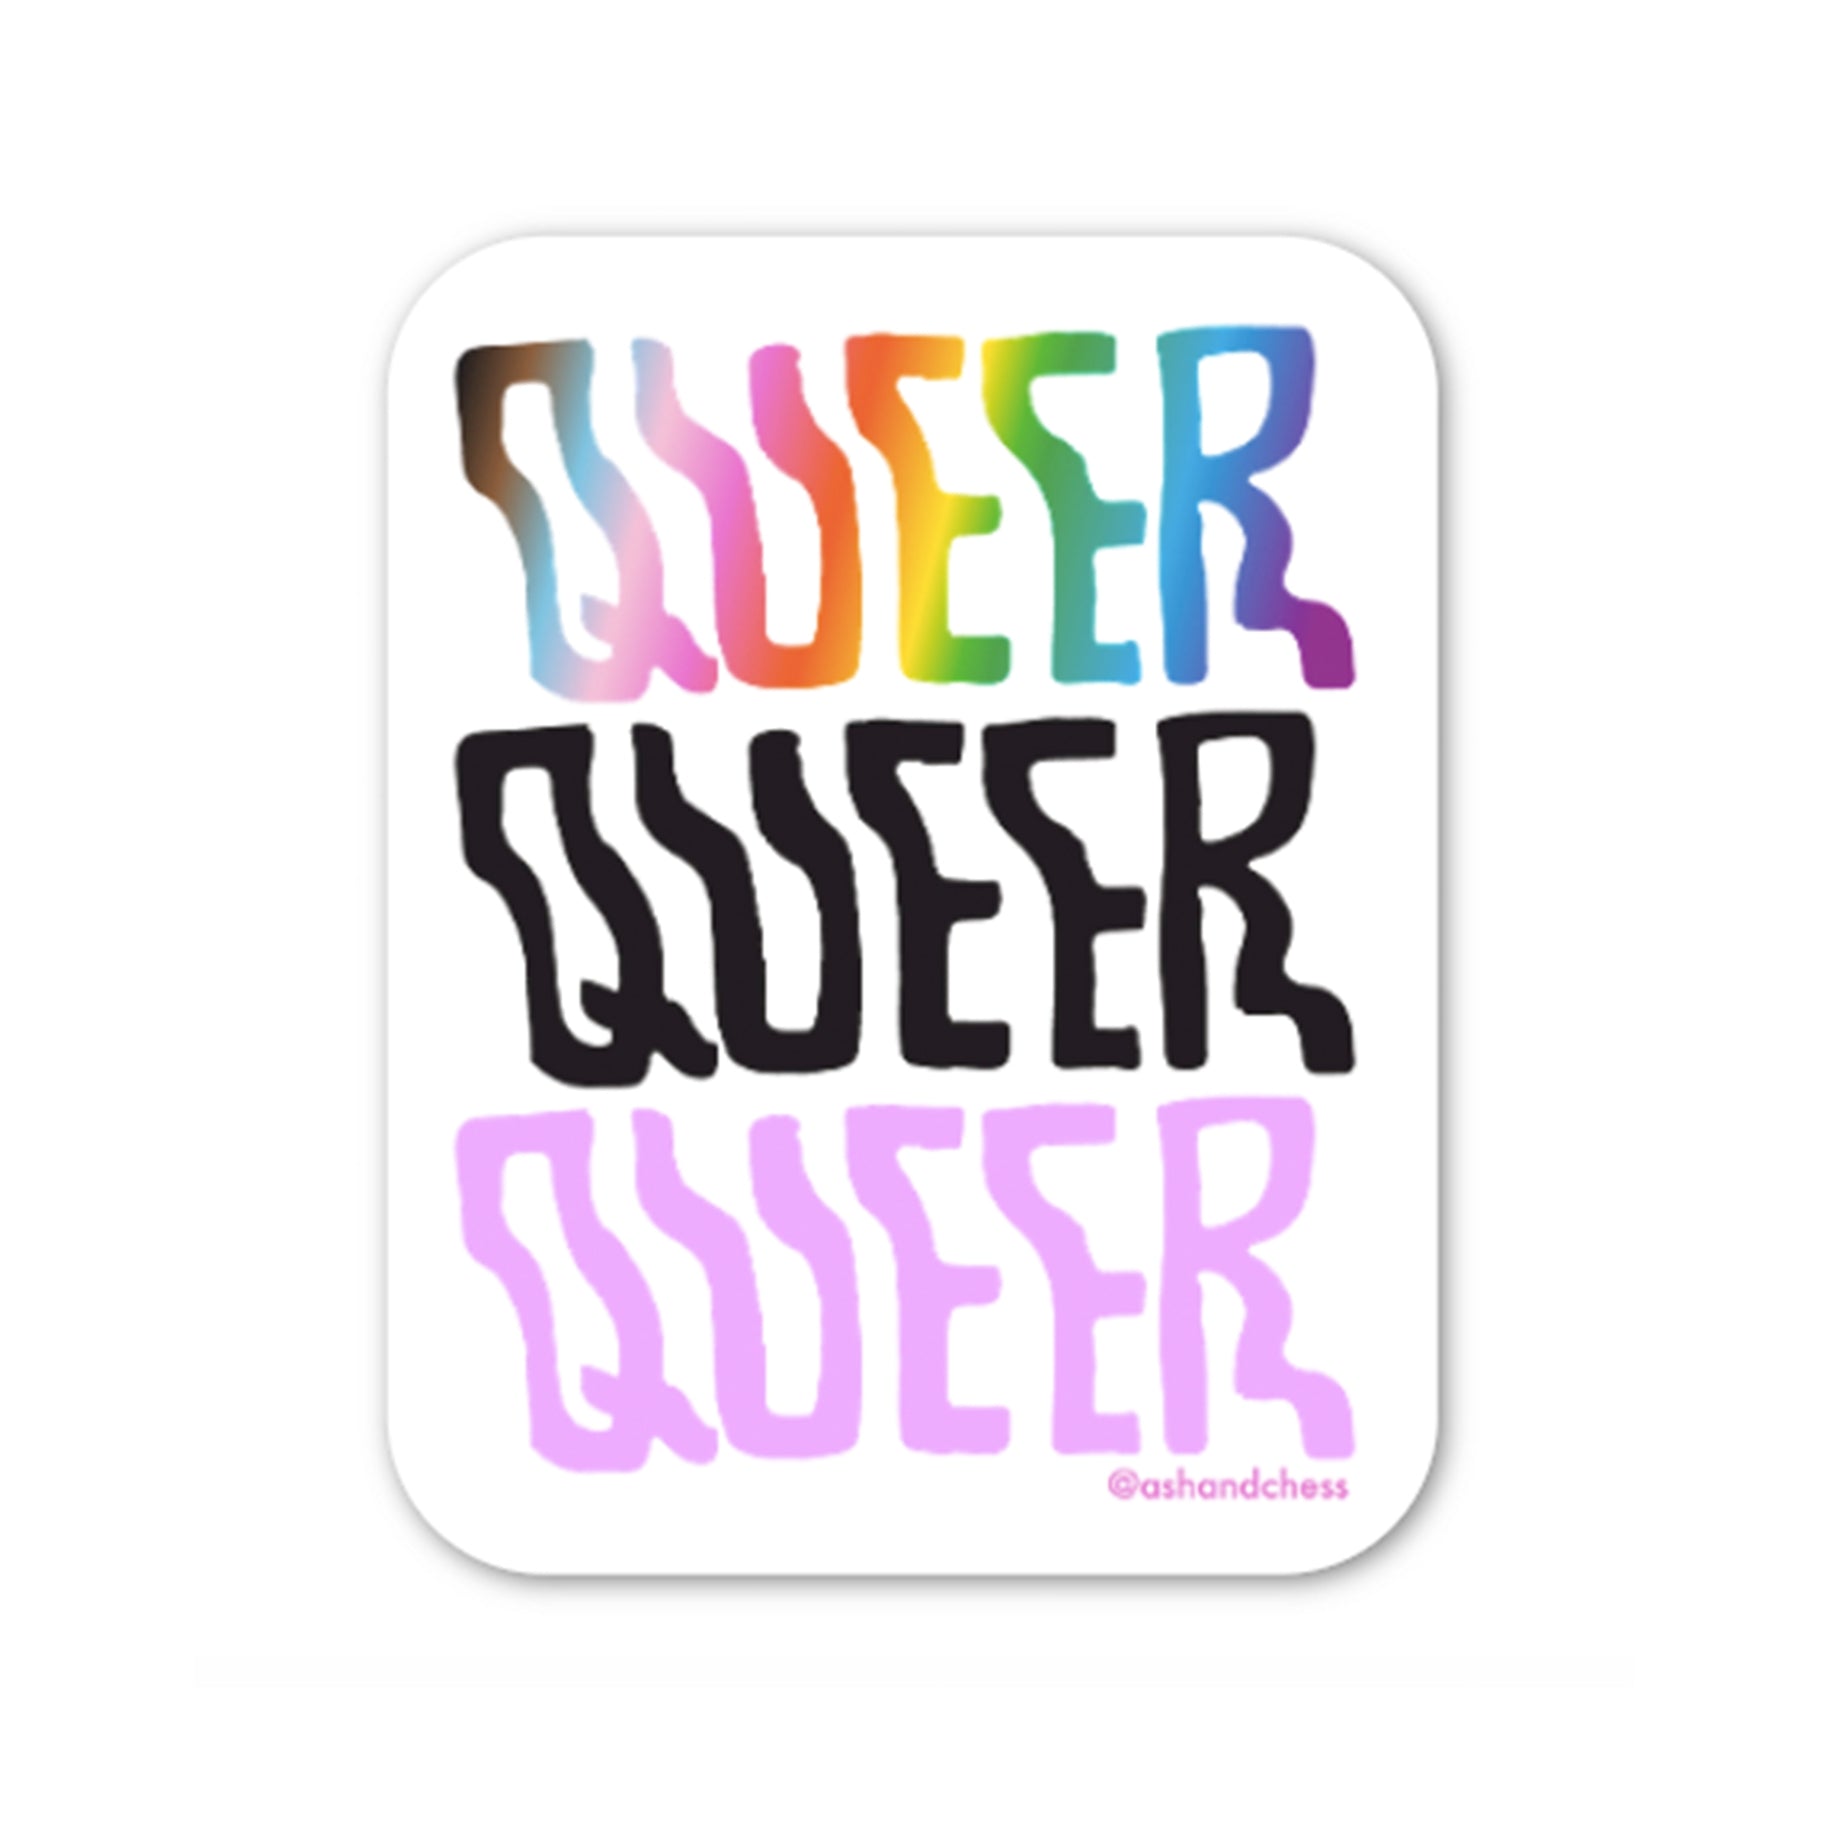 Queer Sticker